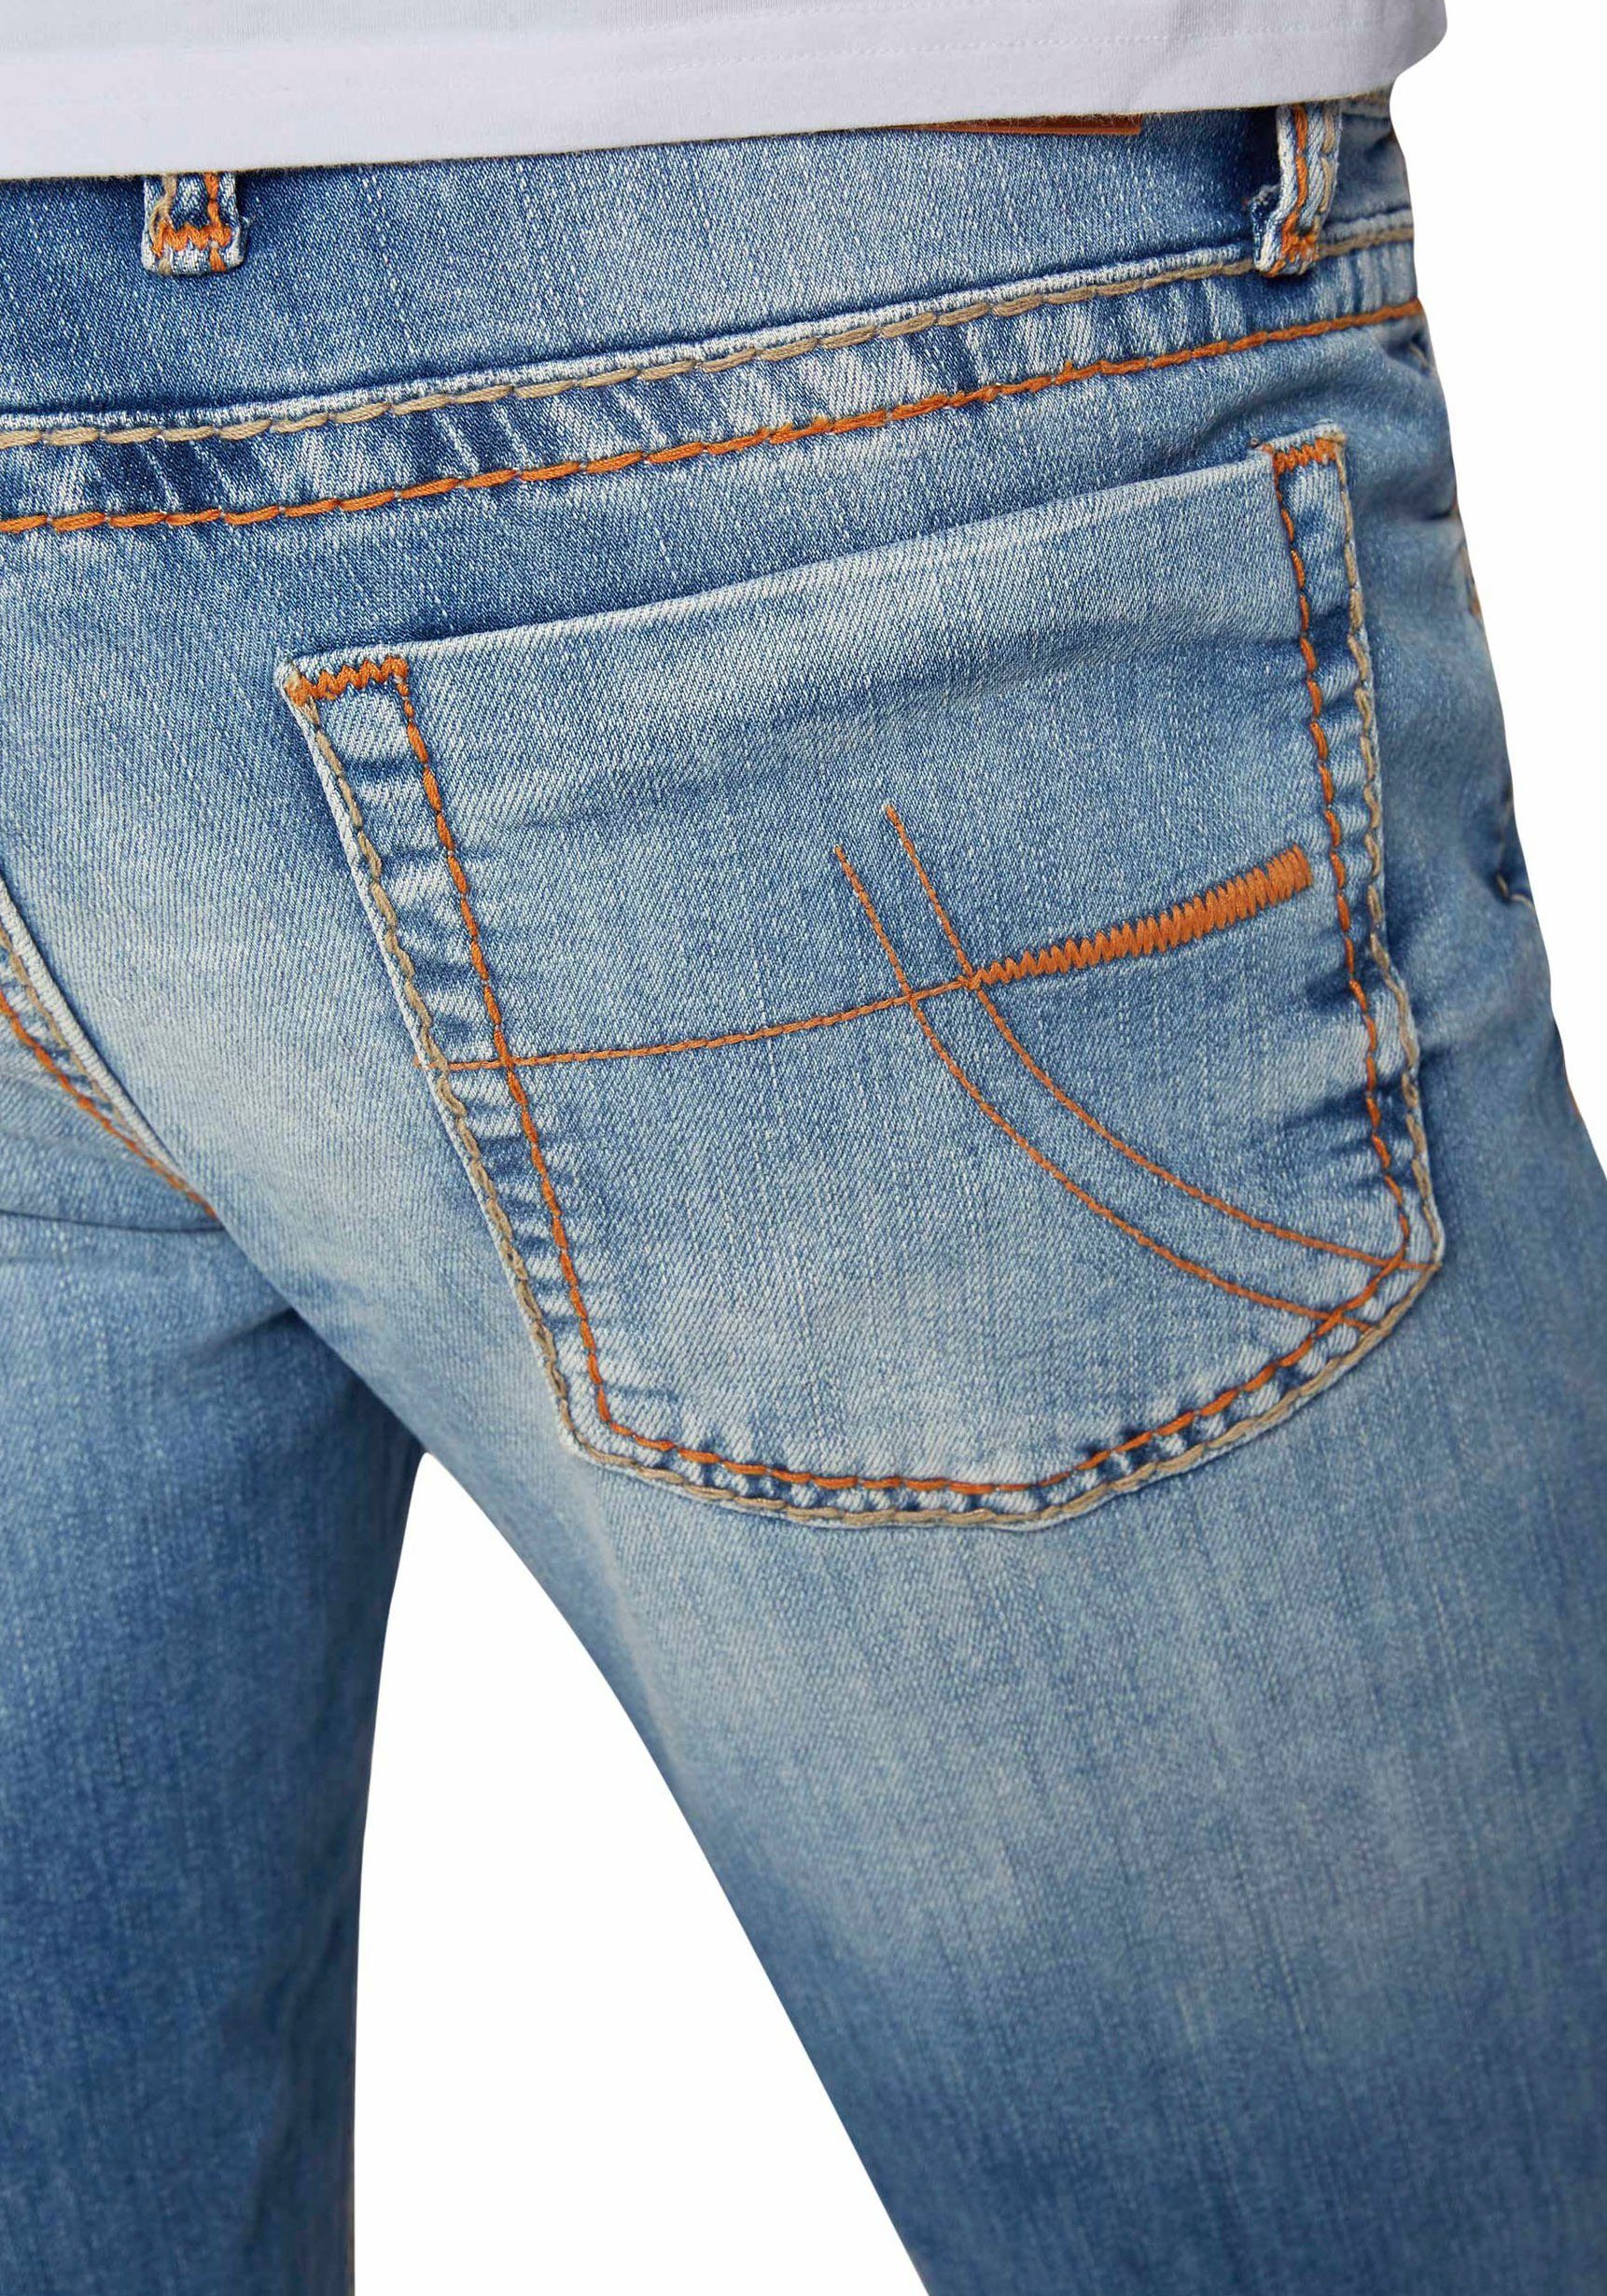 CAMP DAVID Straight-Jeans NI:CO:R611 mit markanten light Steppnähten vintage